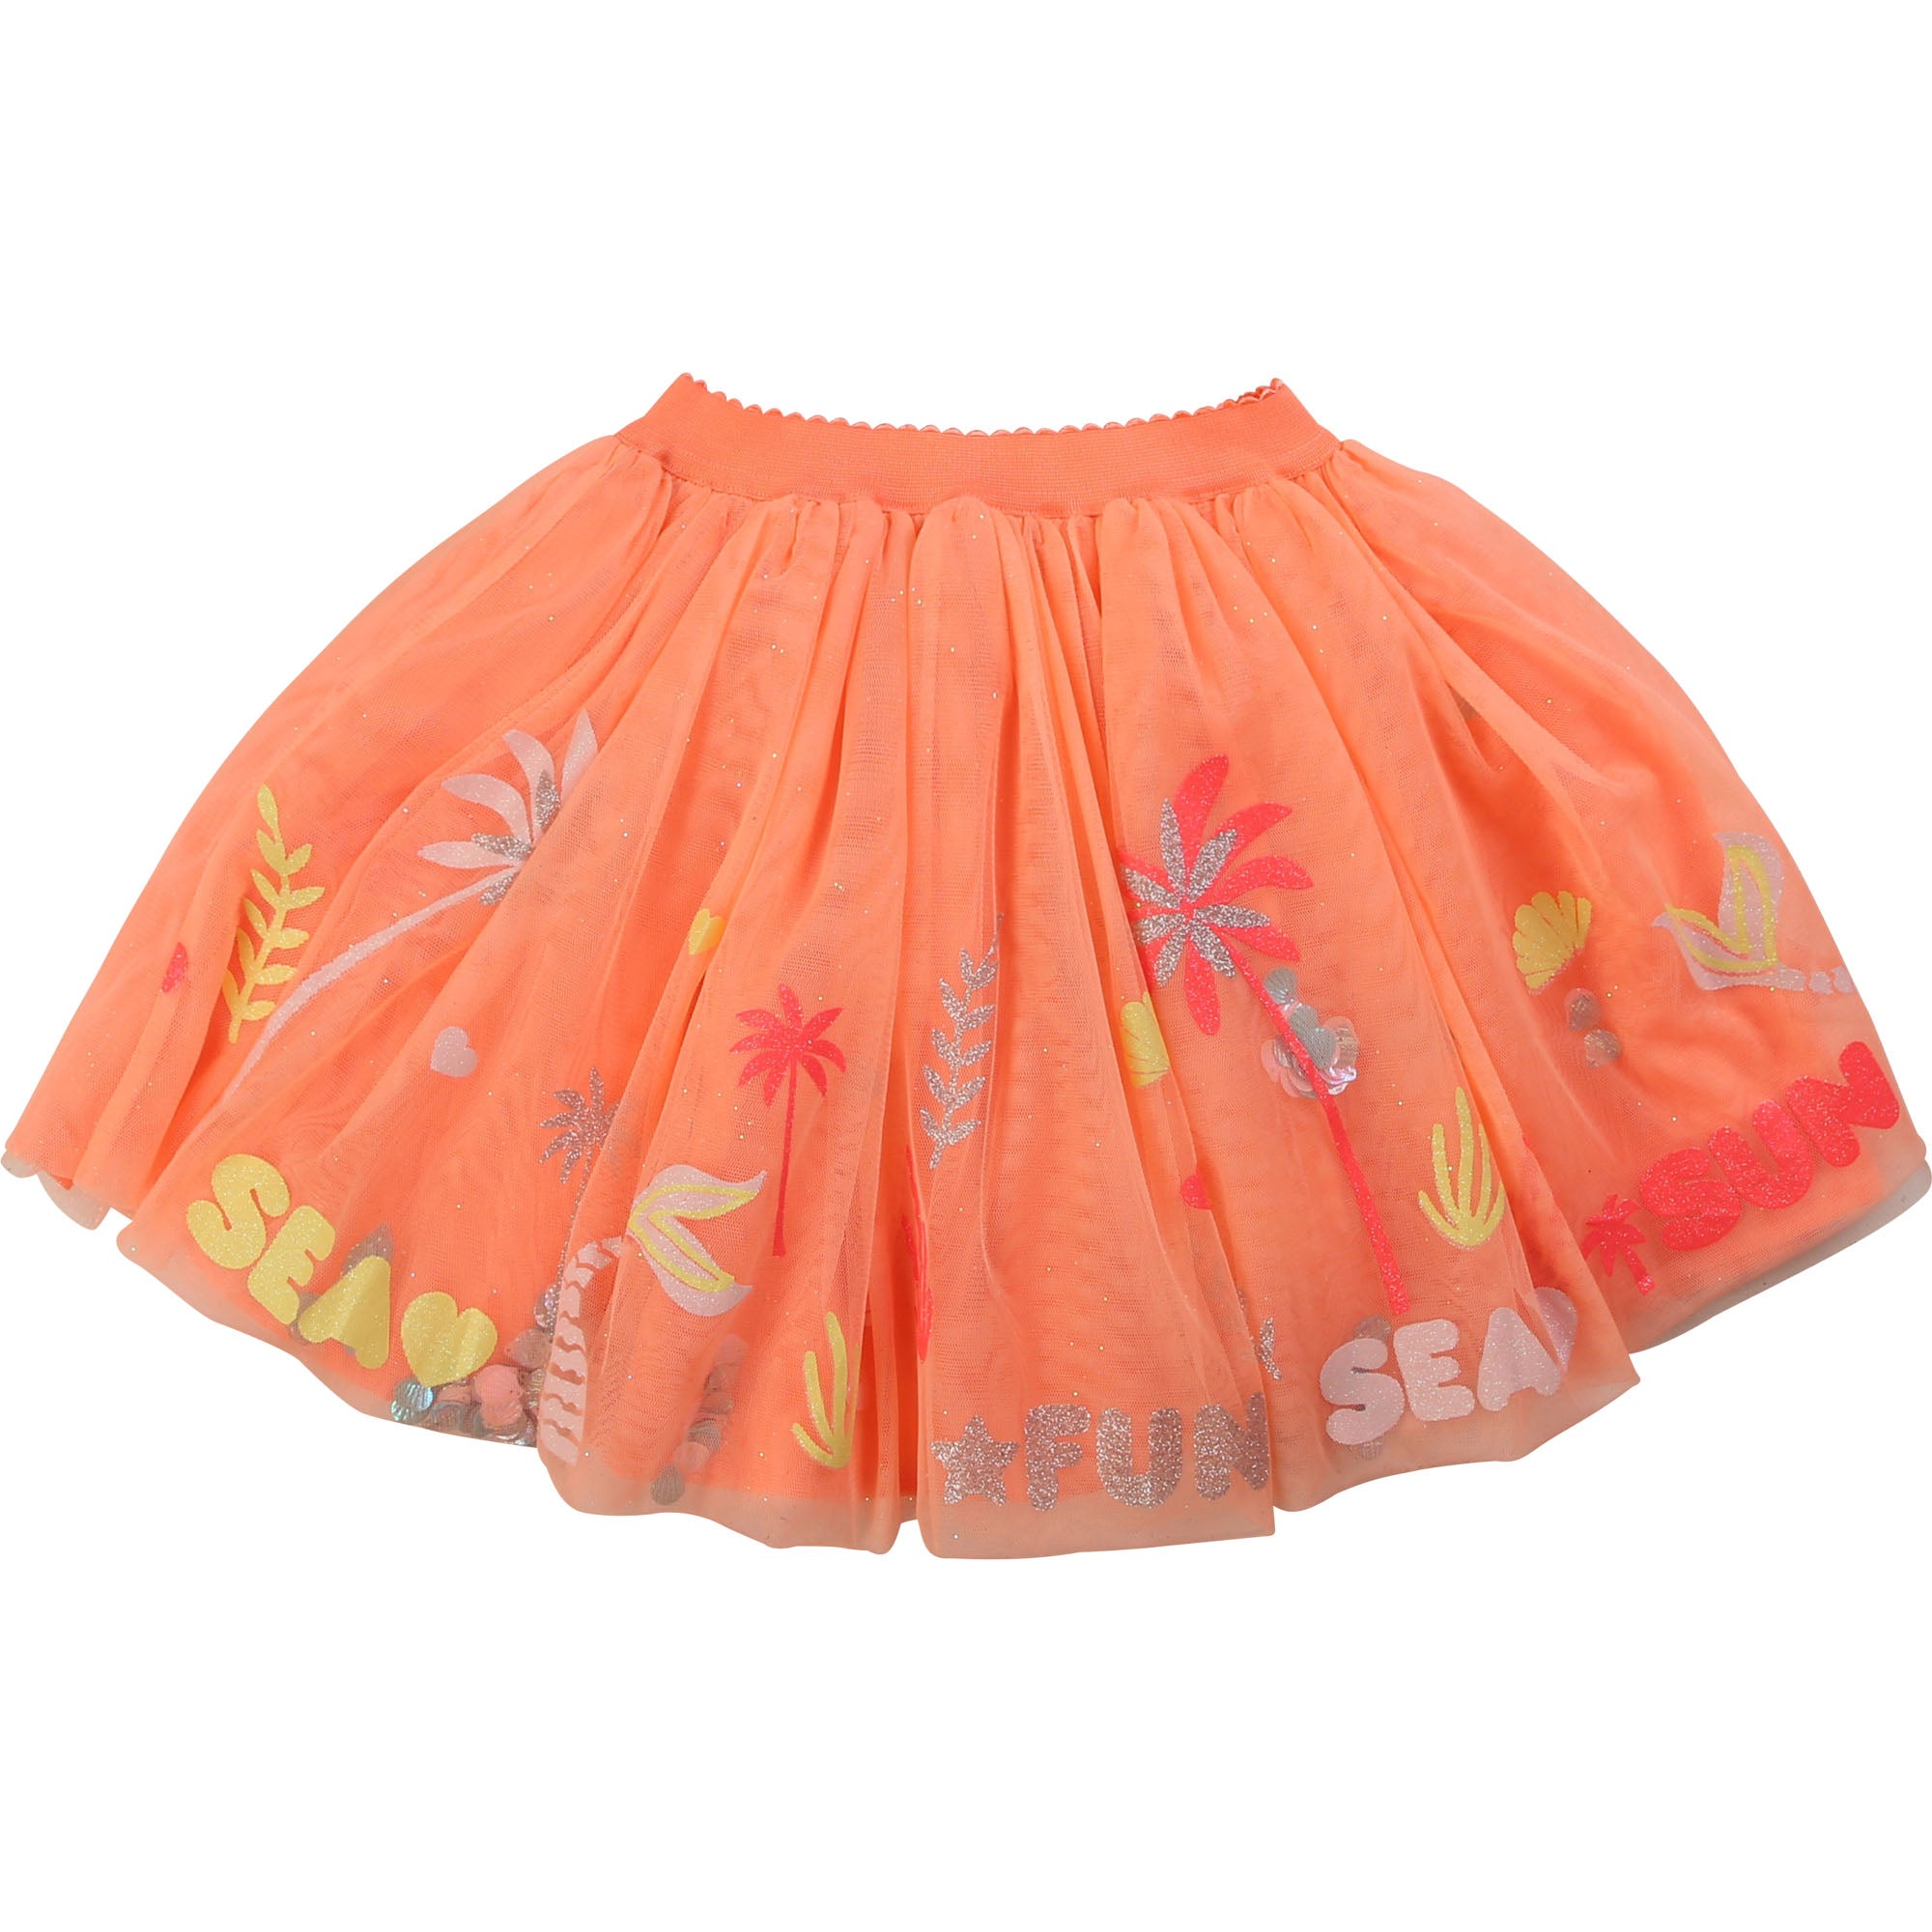 Girls Orange Printed Tulle Skirt